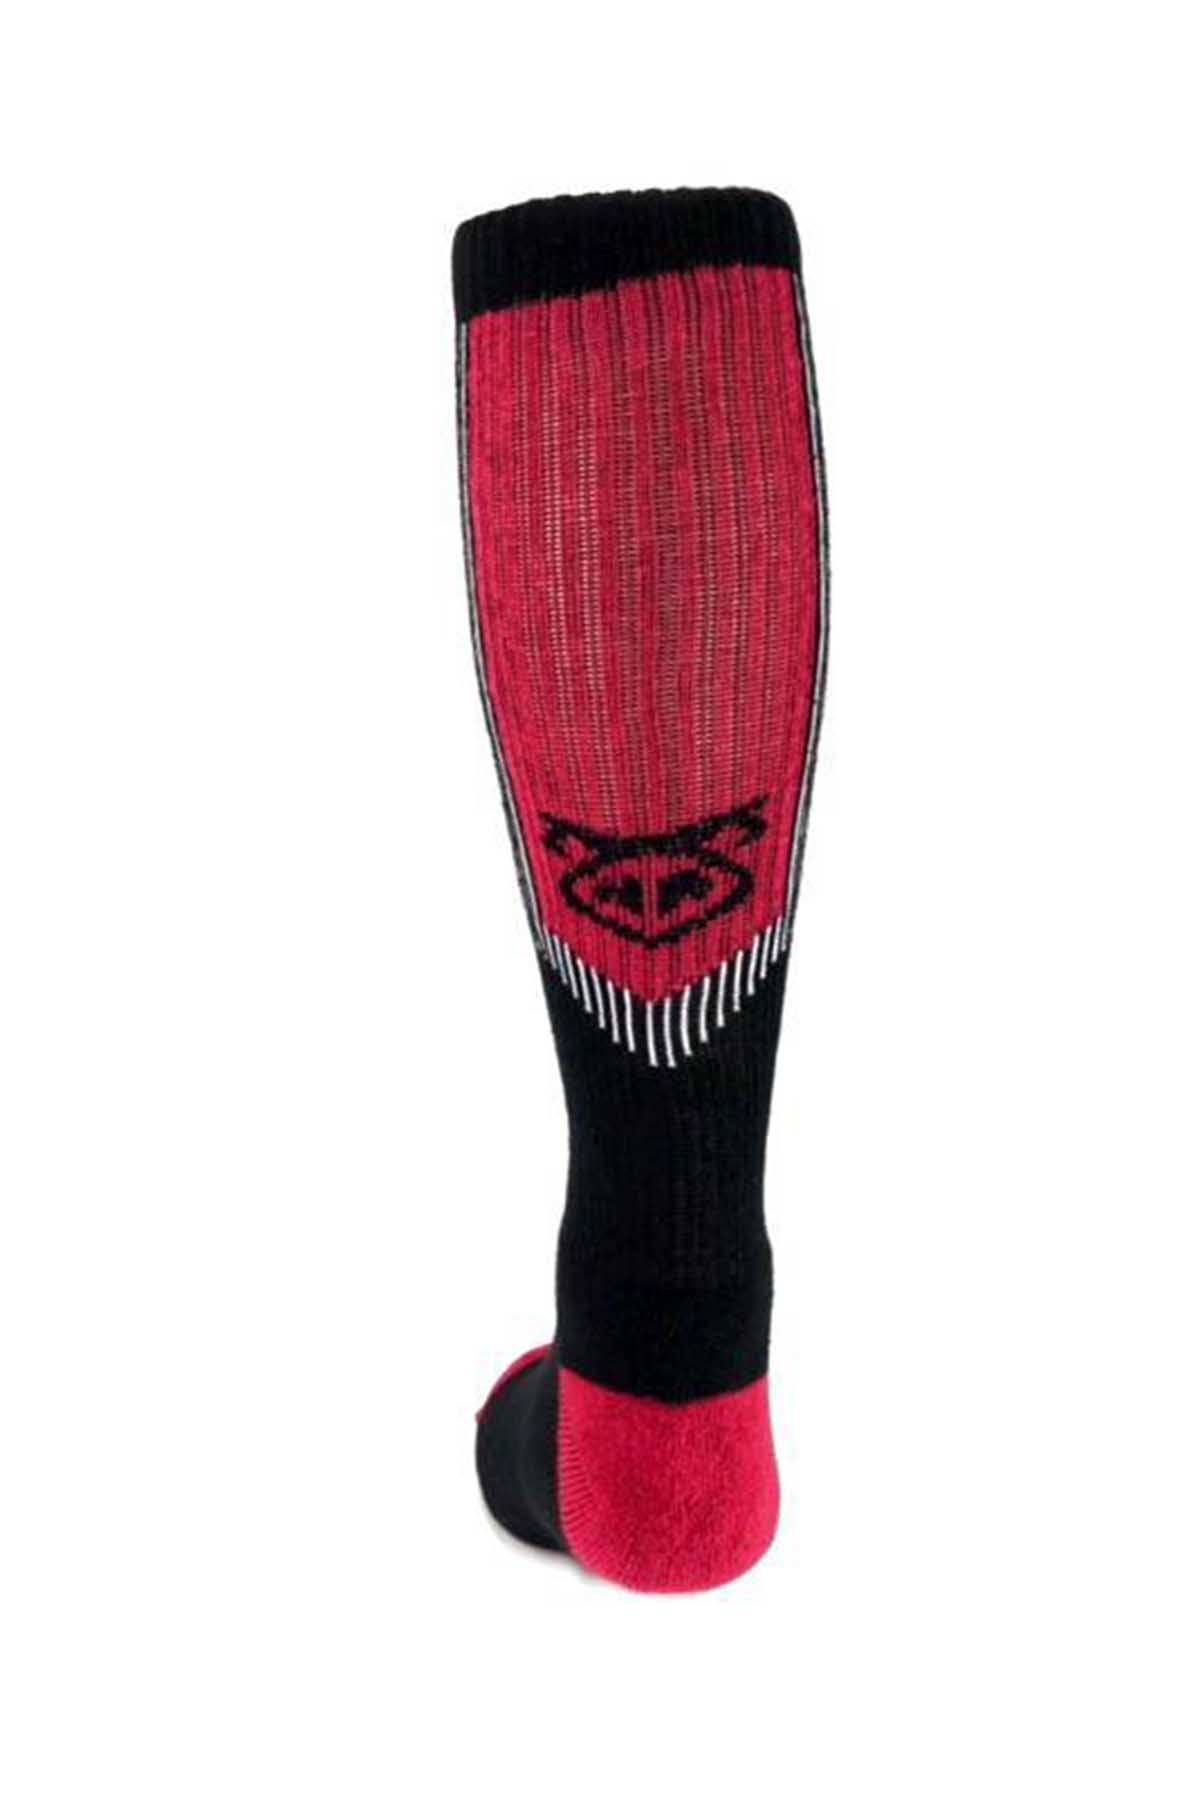 Nasty Pig Black/Red Advance Sock